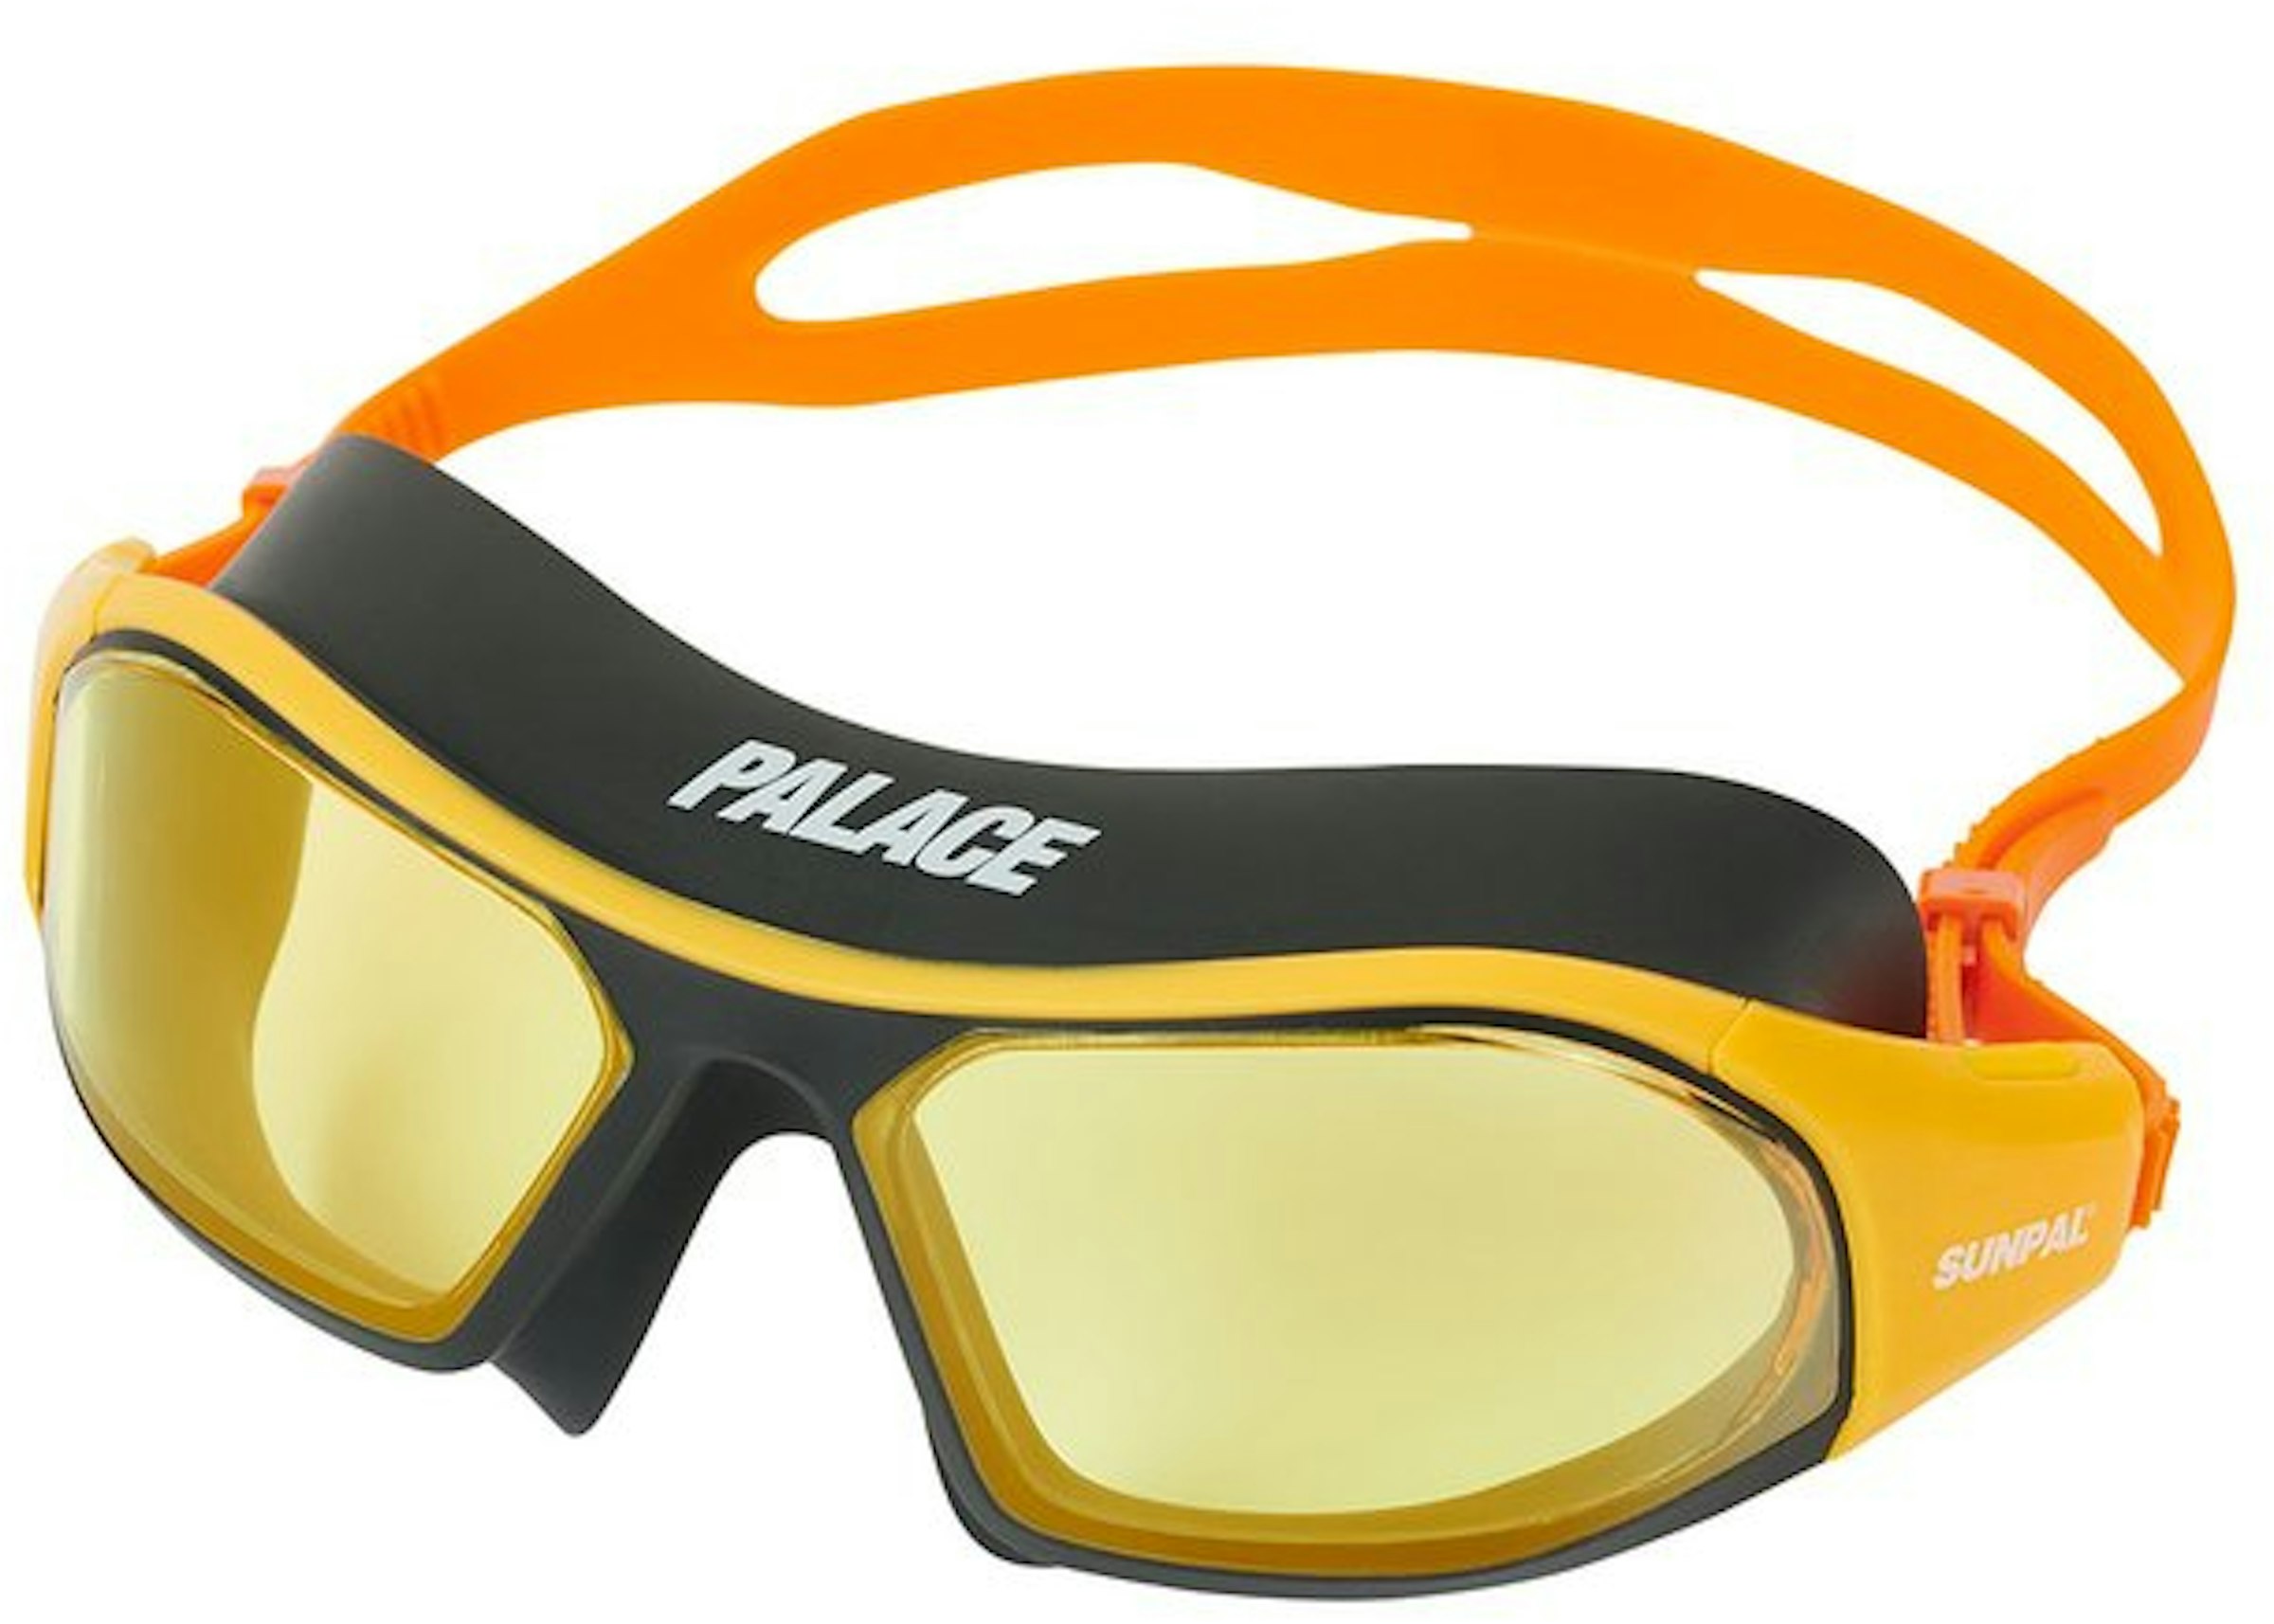 Interpretación Oso polar Sangrar Palace Adidas Sunpal Swimming Goggles Bright Orange - FW20 - US